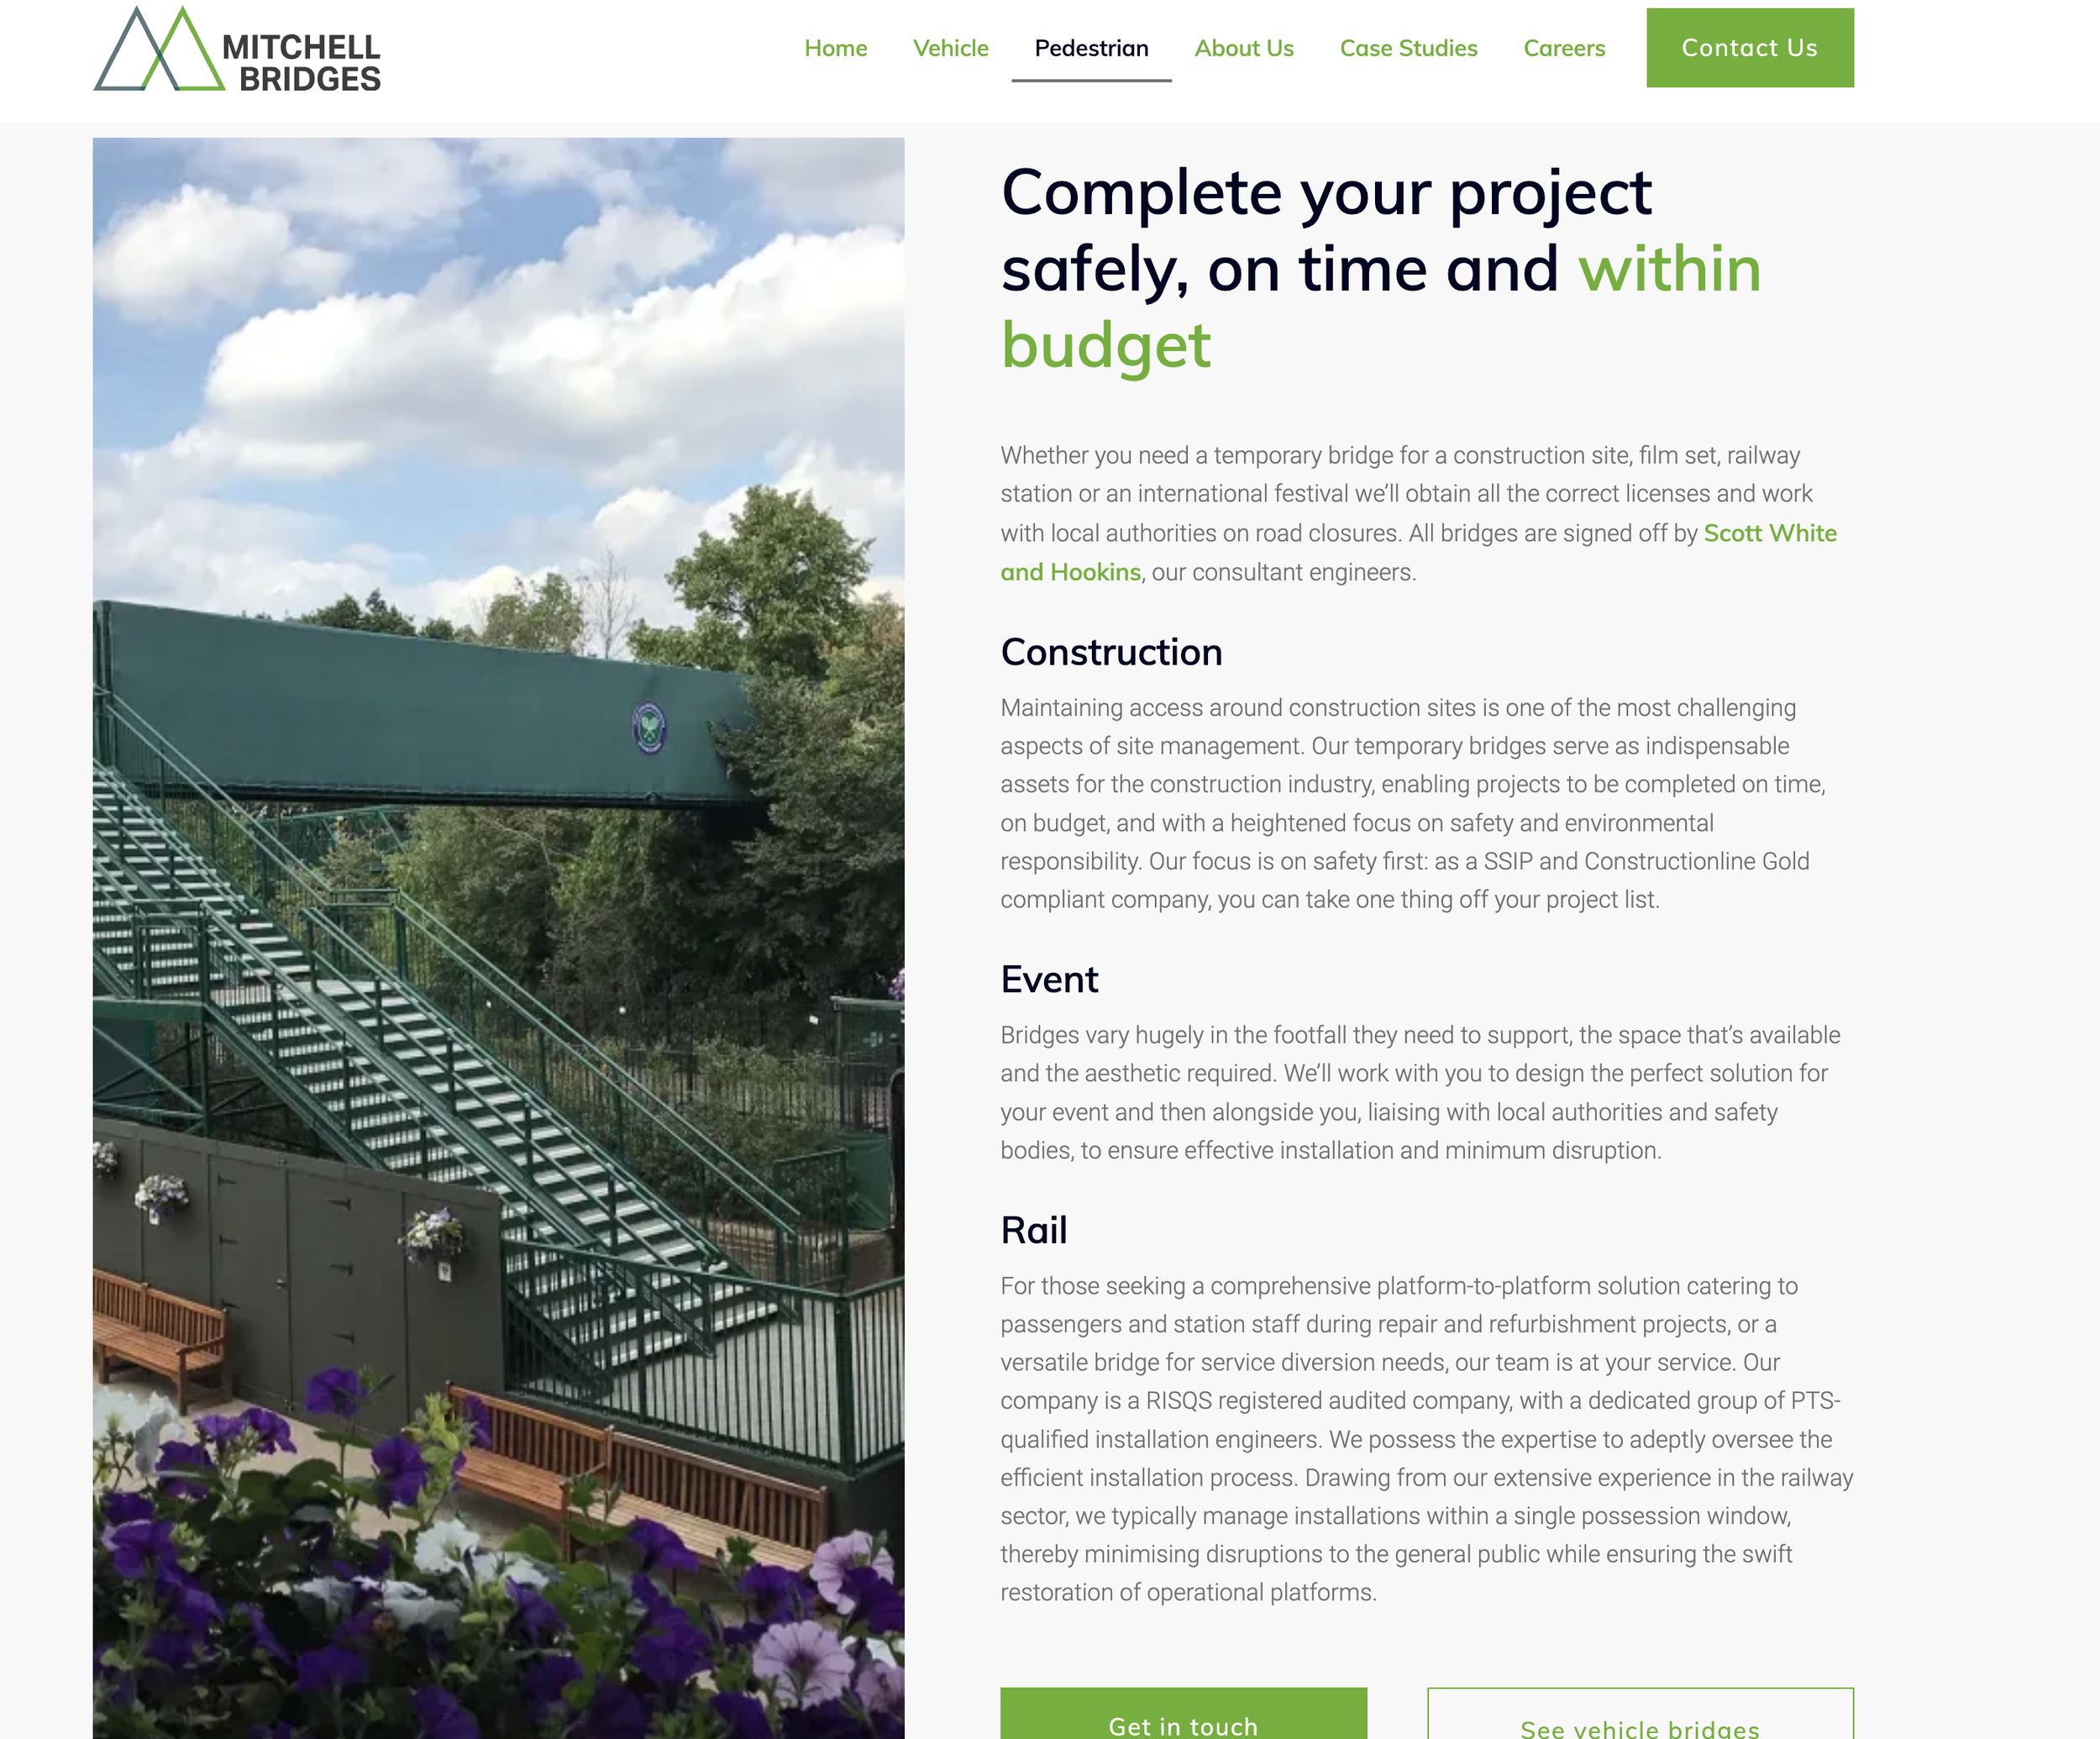 summit-digital-website-development-mitchell-bridges3.png